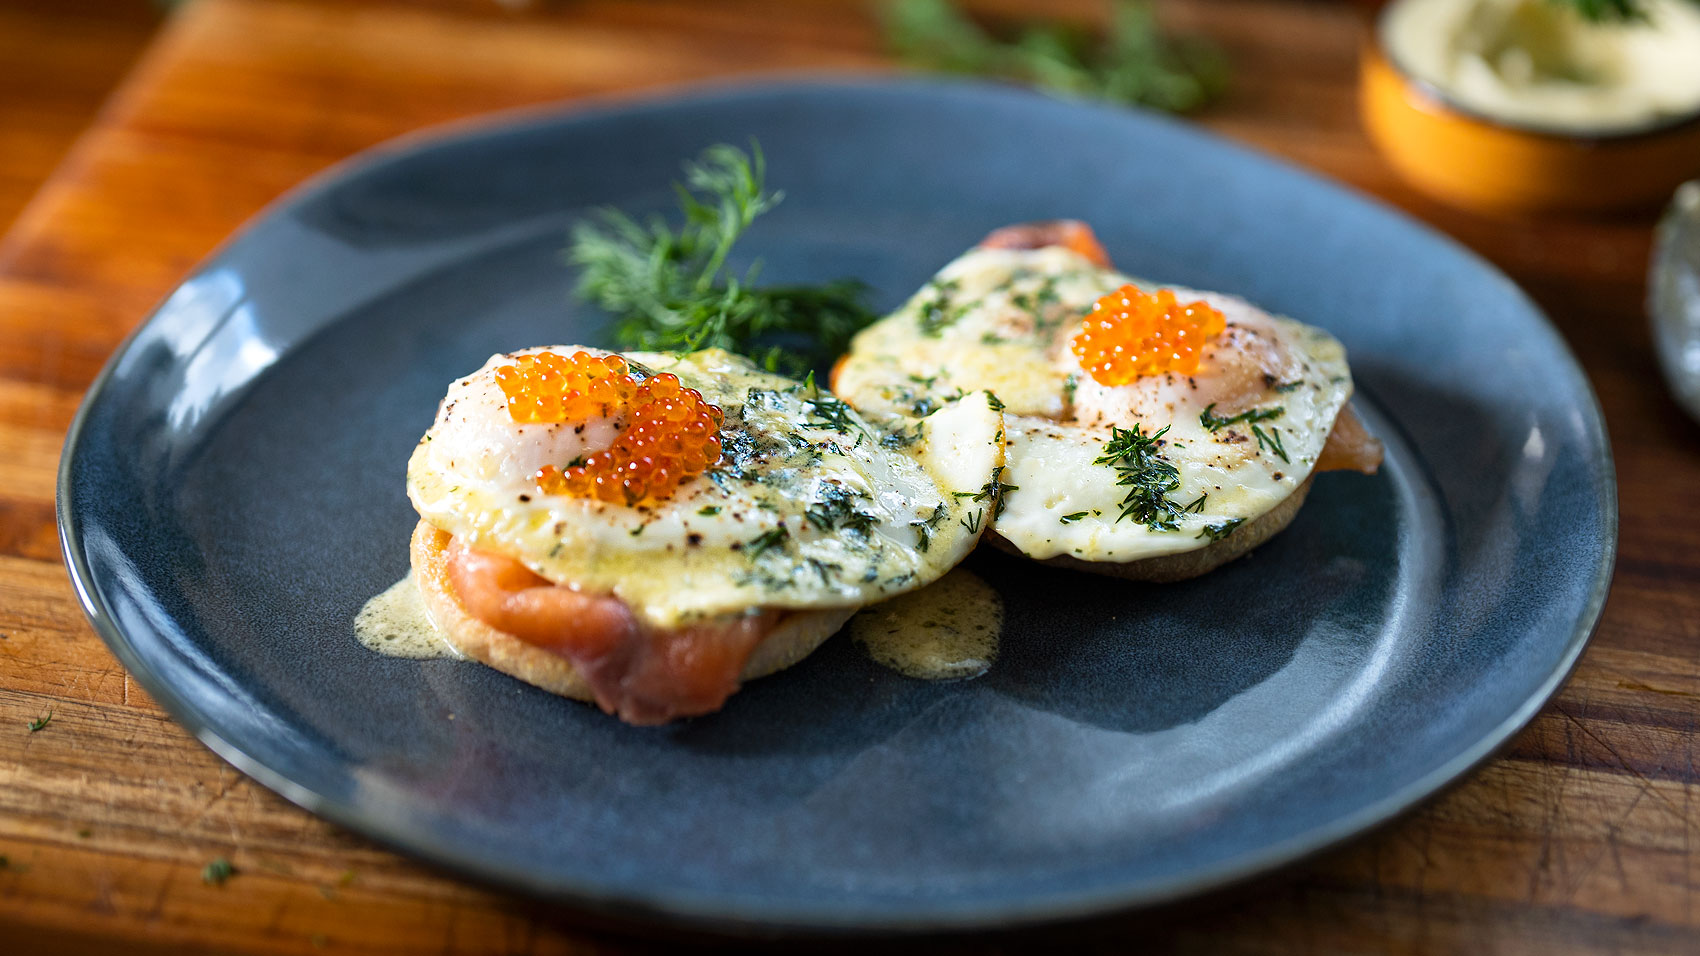 https://recipe30.com/wp-content/uploads/2022/09/Smoked-salmon-creamy-eggs.jpg